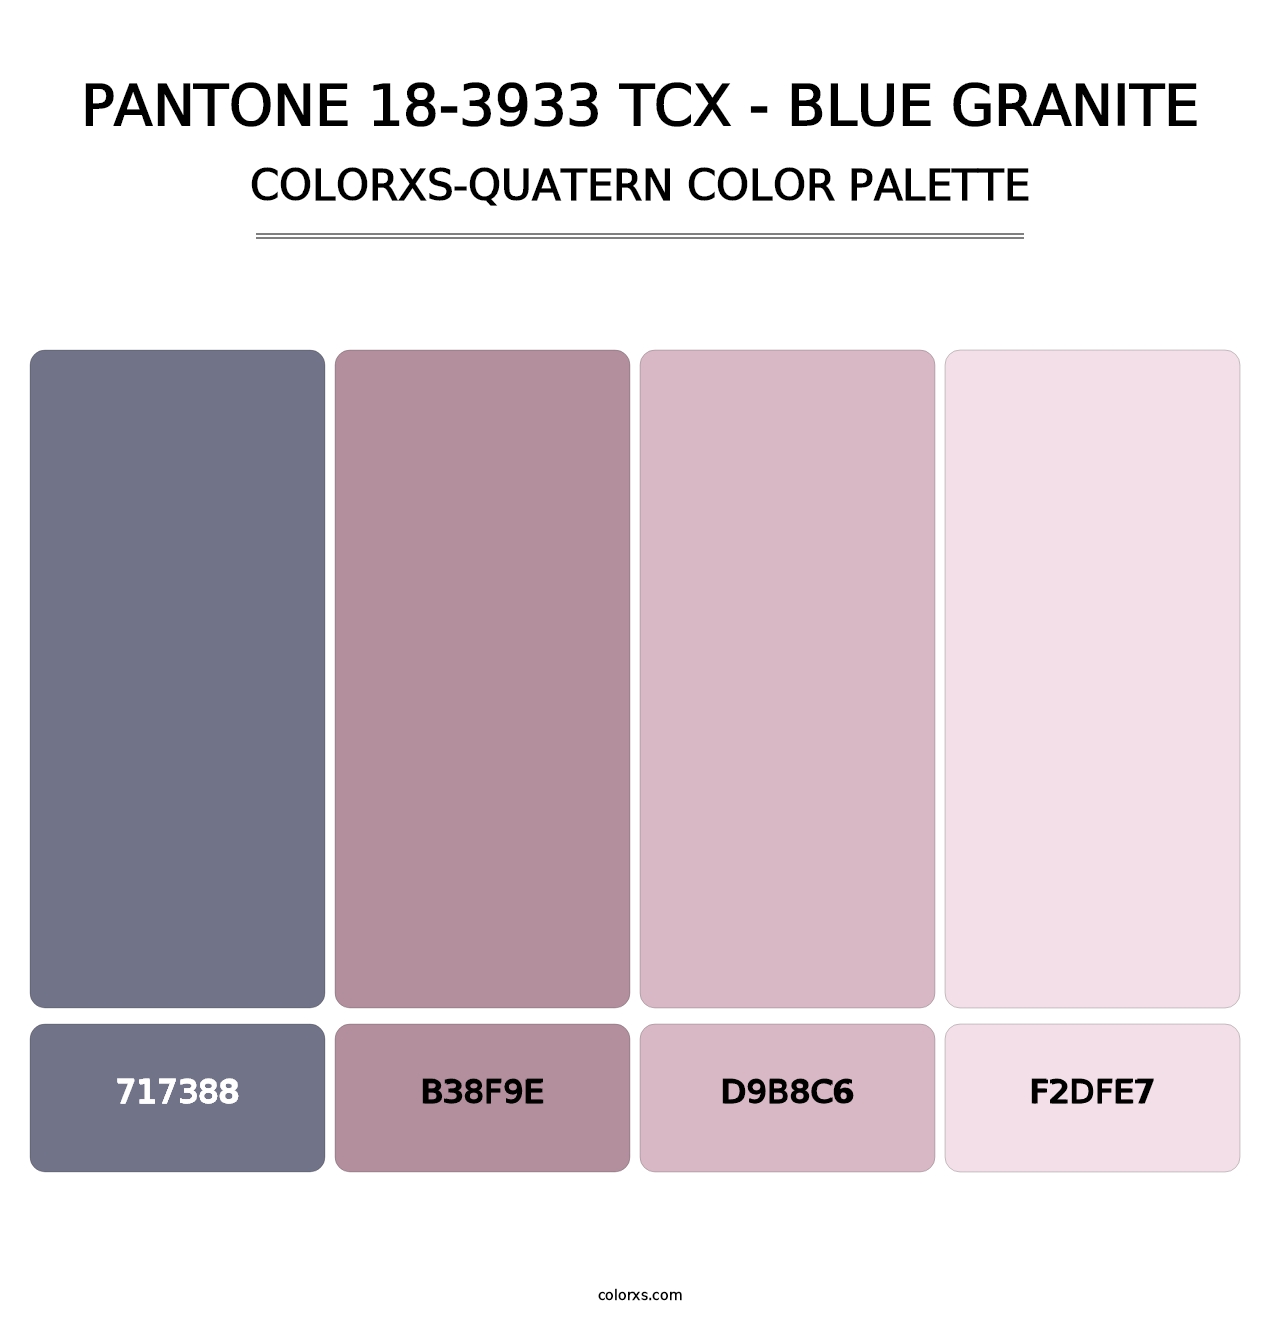 PANTONE 18-3933 TCX - Blue Granite - Colorxs Quatern Palette